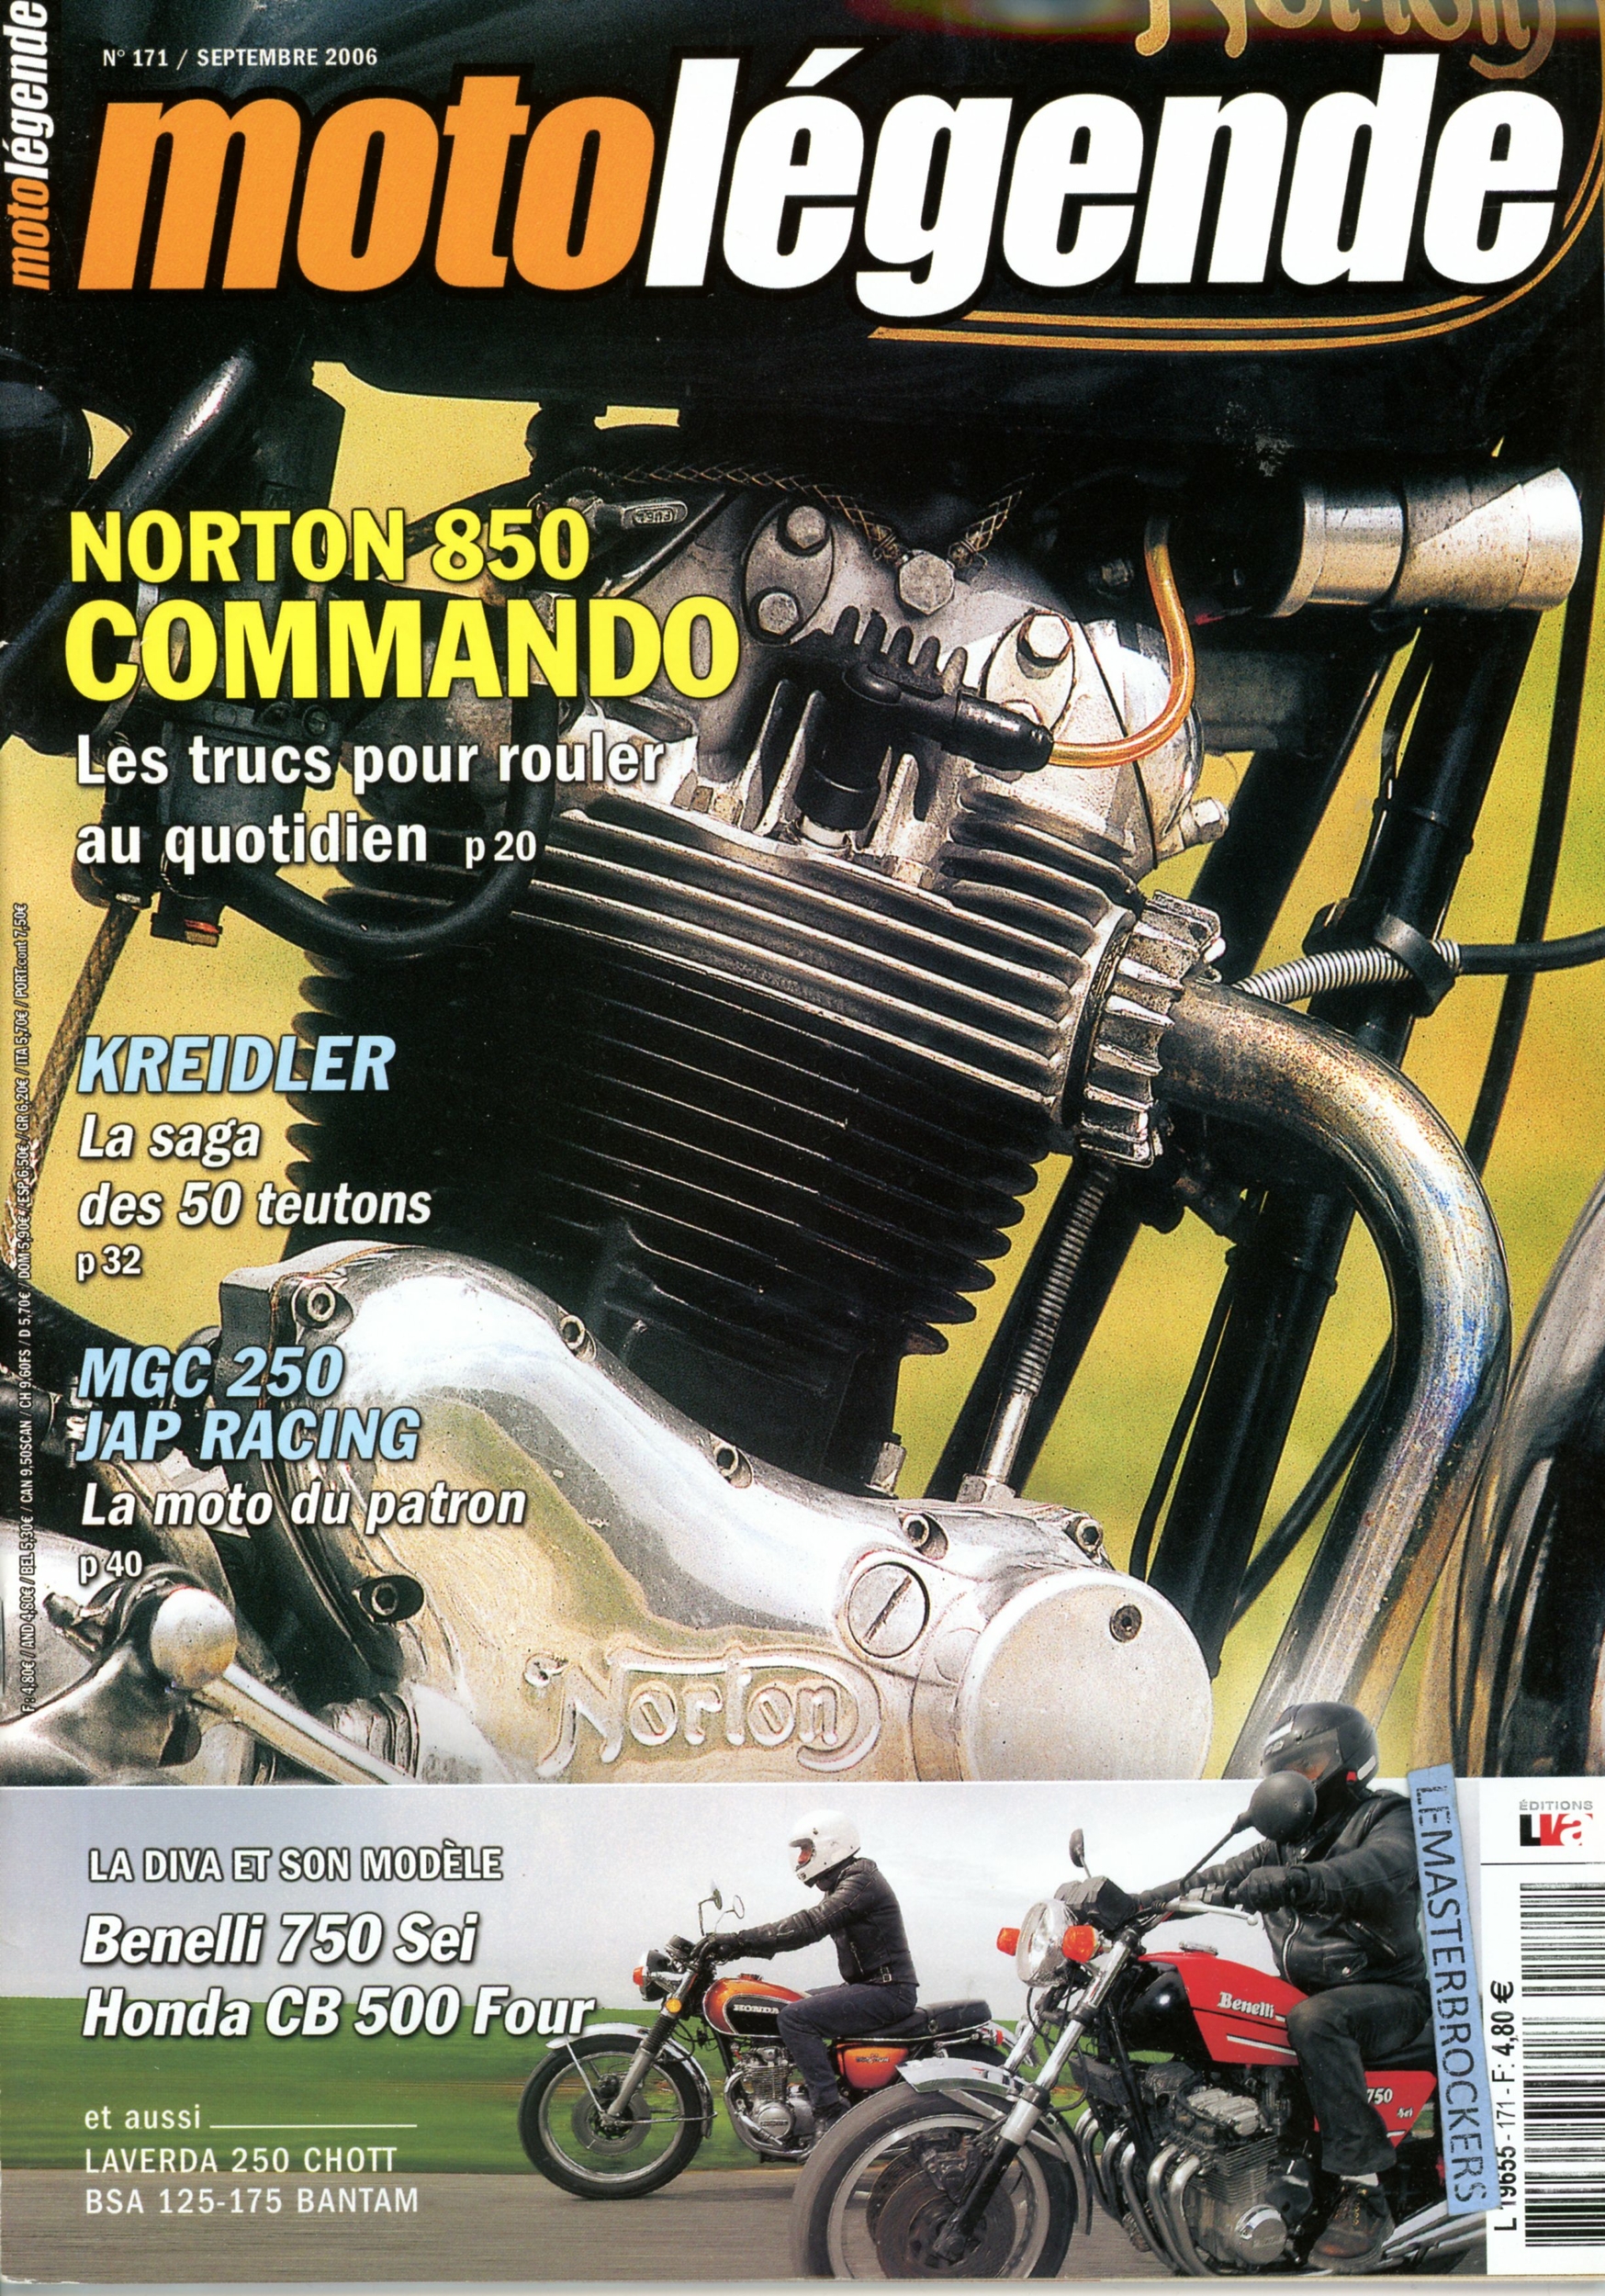 MOTO LÉGENDE N° 171 - NORTON 850 COMMANDO - KREIDLER - MGC 250 JAP RACING - BENELLI 750 SEI HONDA CB500 FOUR